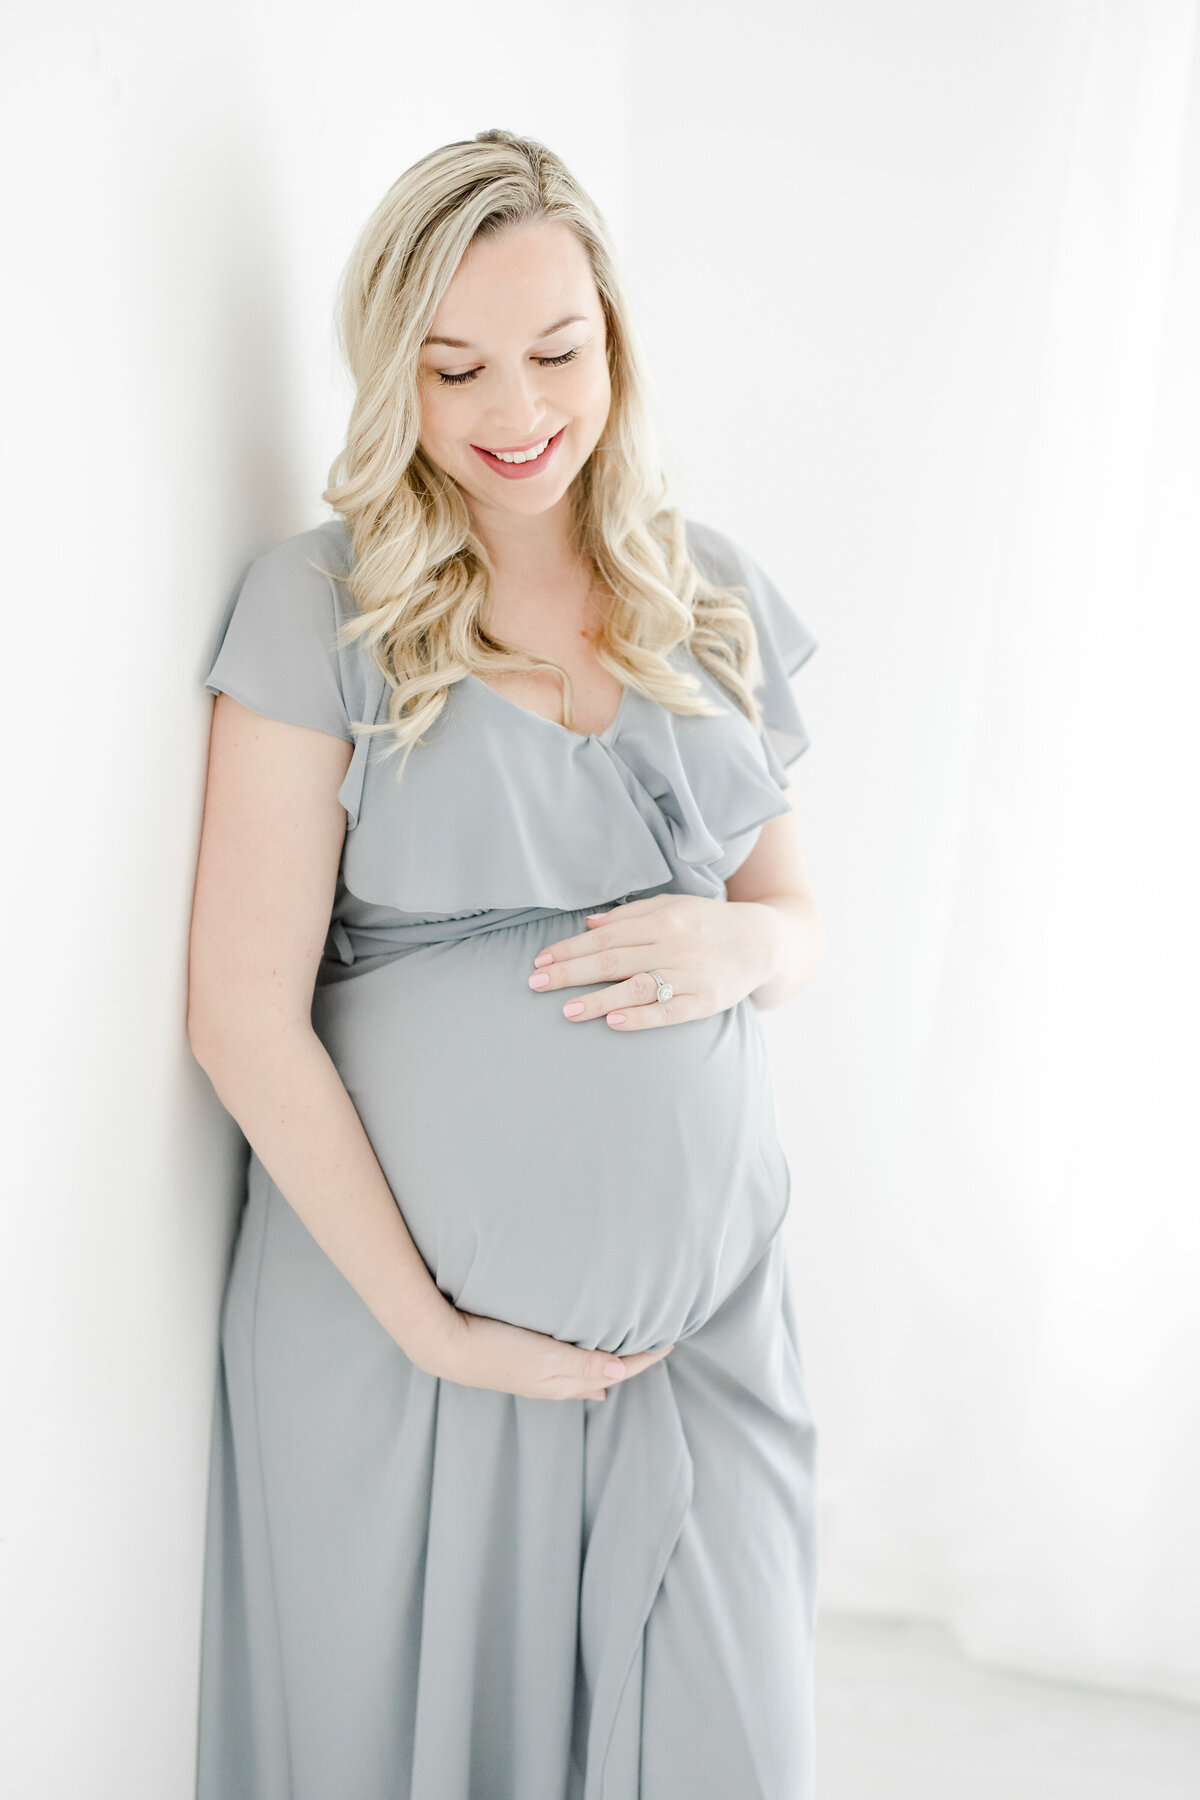 Westport CT Maternity Photographer - 36